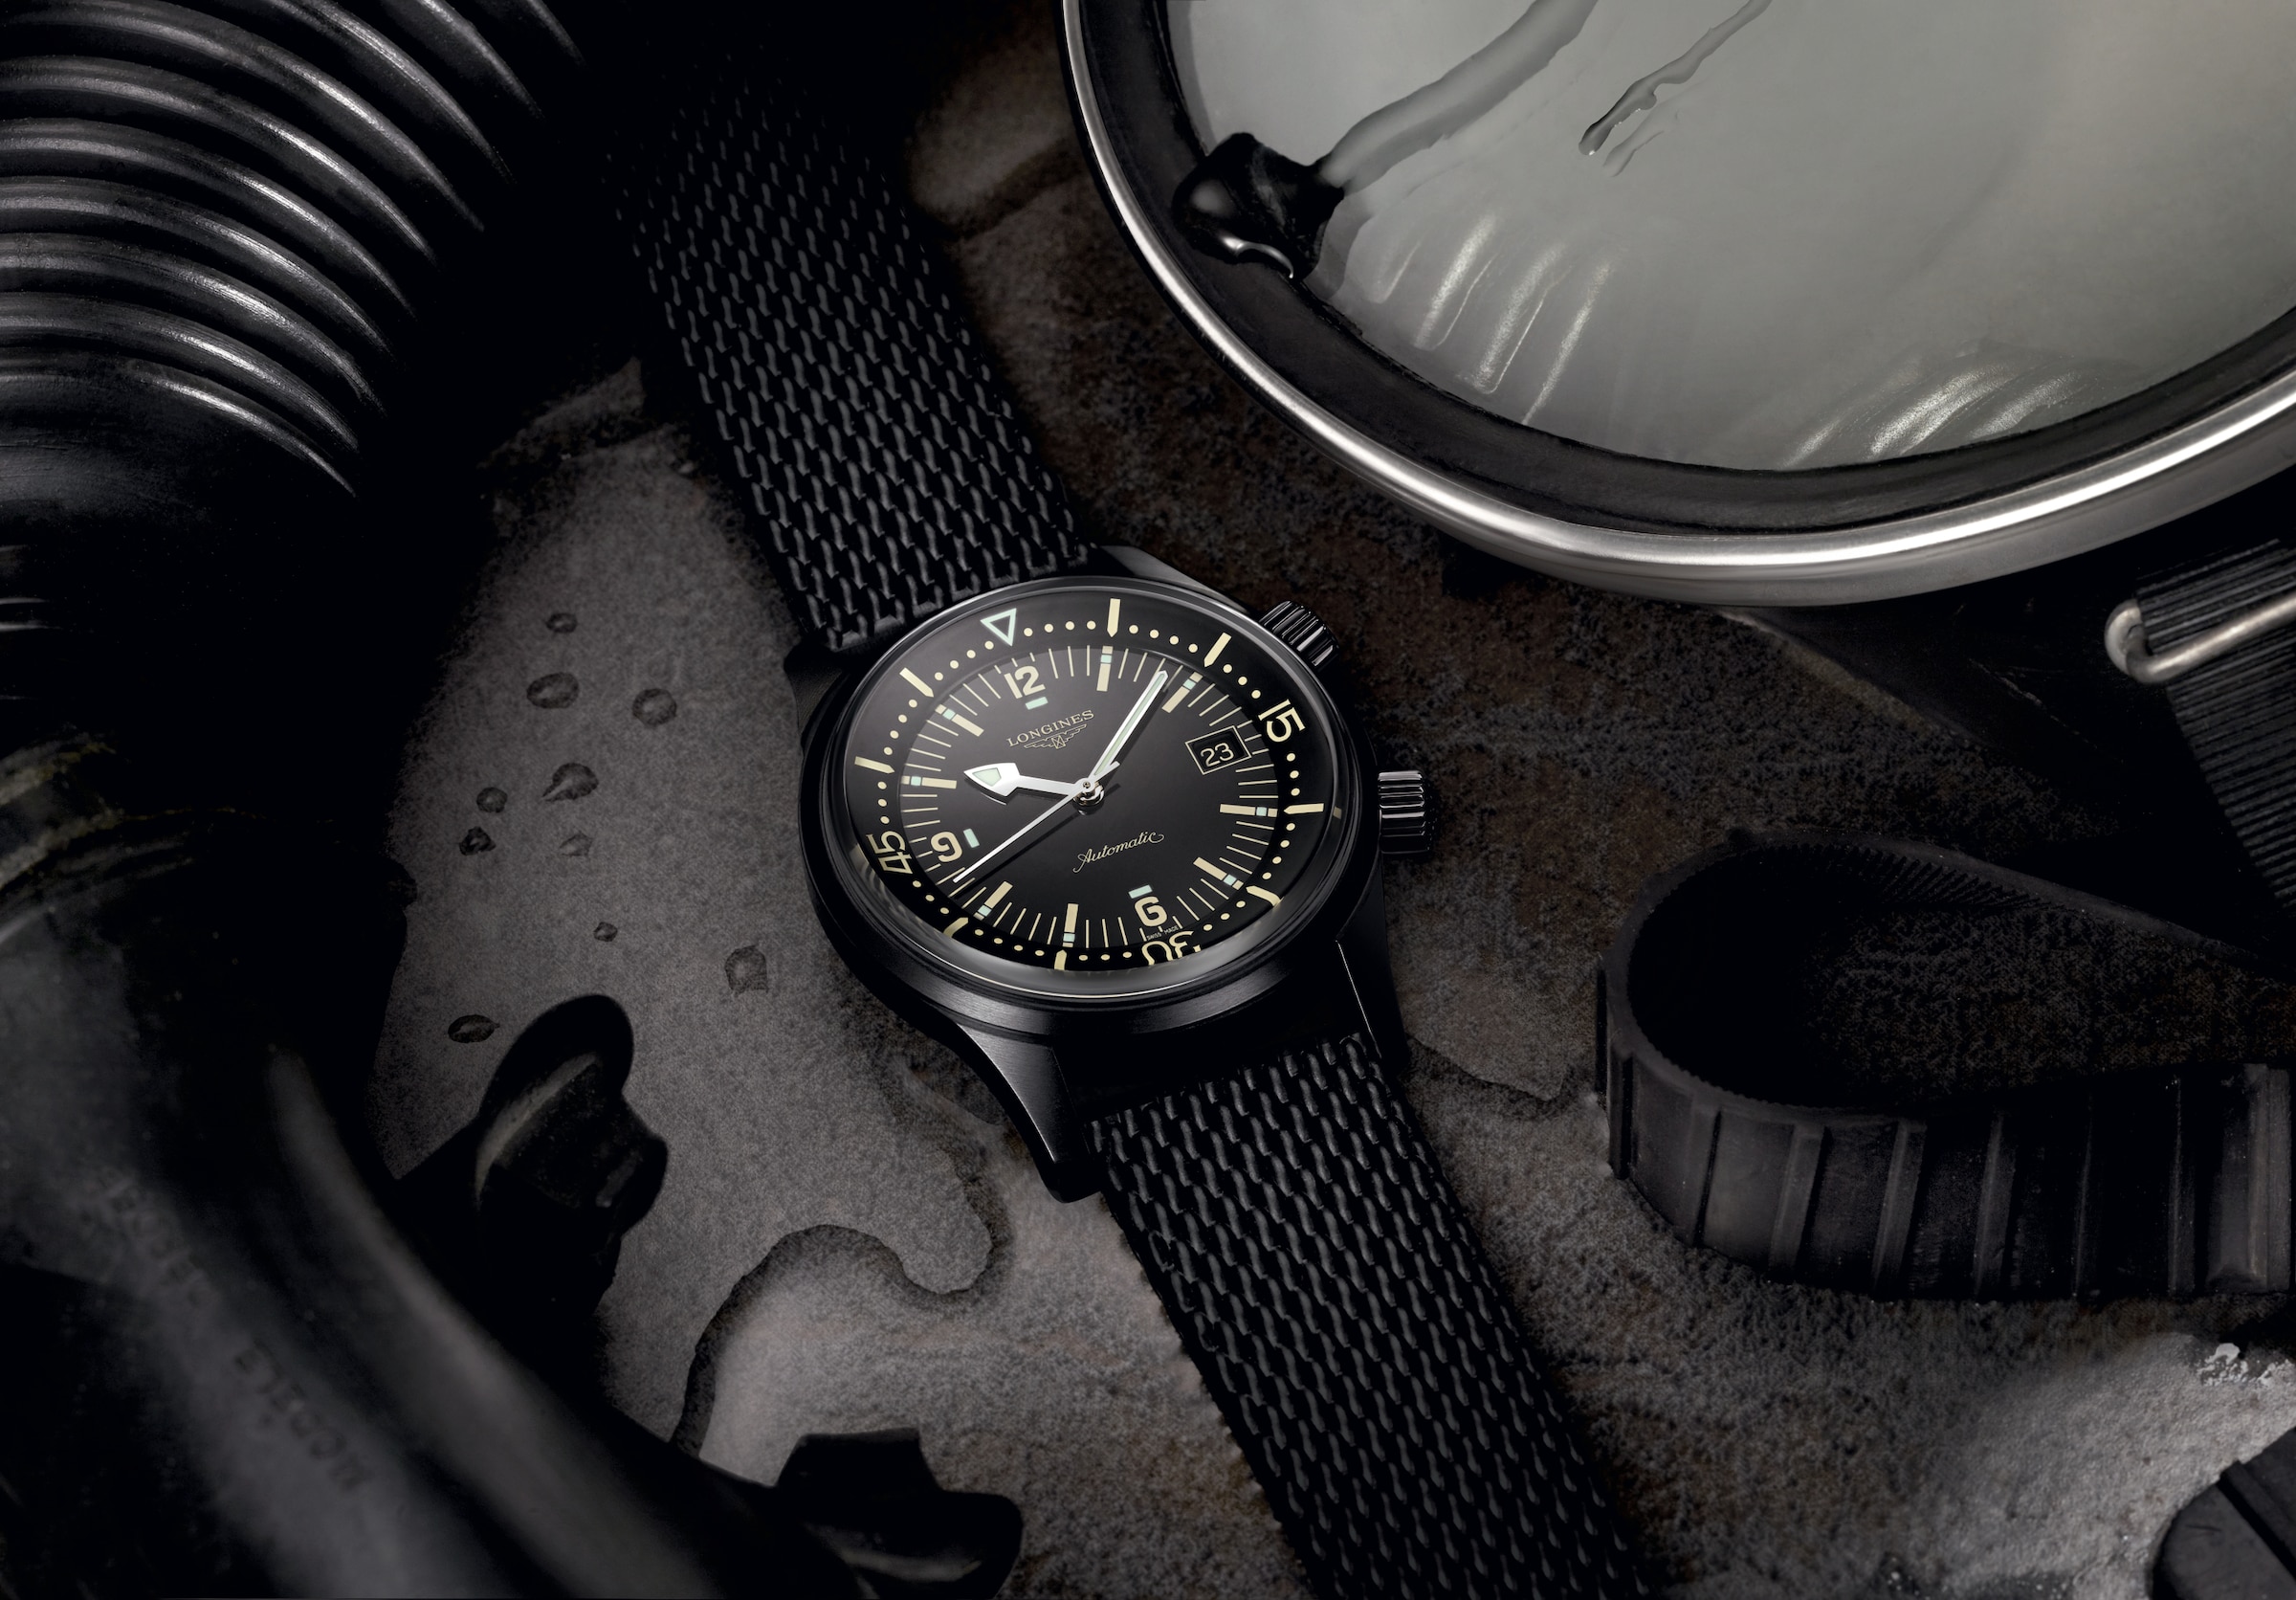 Longines LEGEND DIVER Automatic Black PVD coating Watch - L3.774.2.50.9